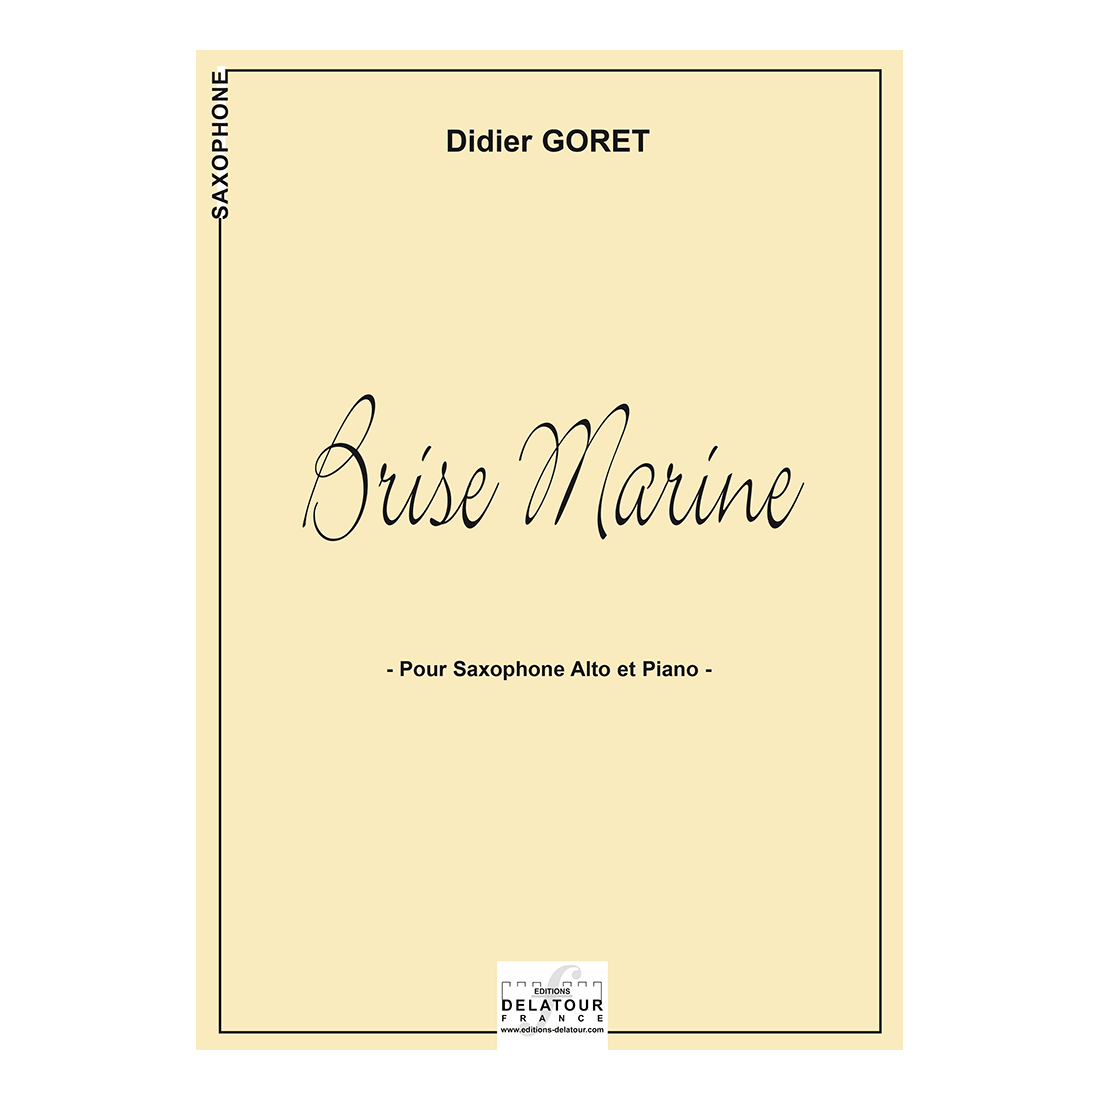 Brise marine for alto saxophone and piano